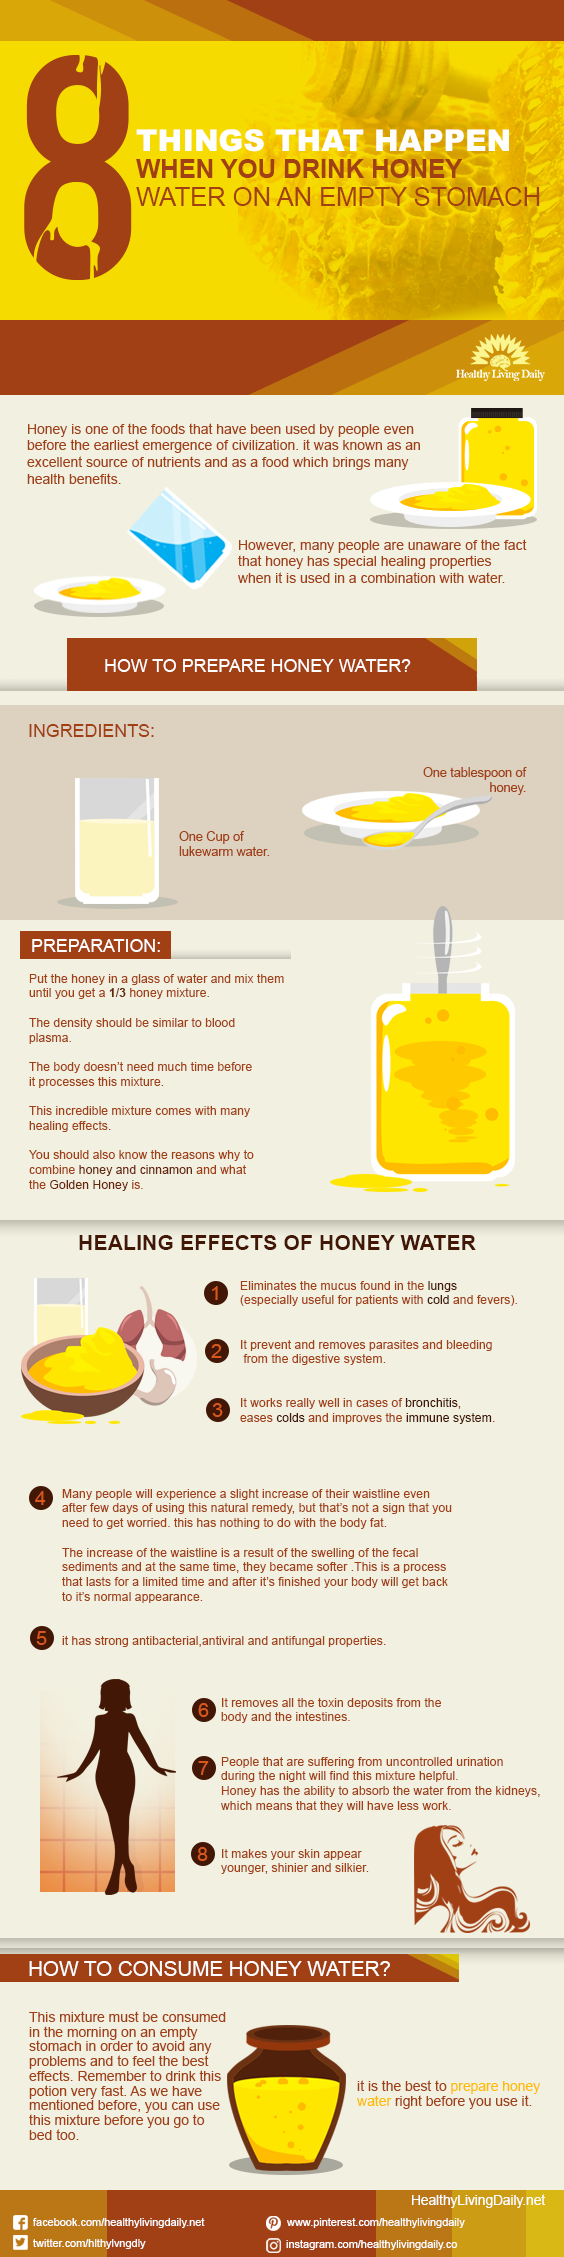 infographic image of honey water benefits